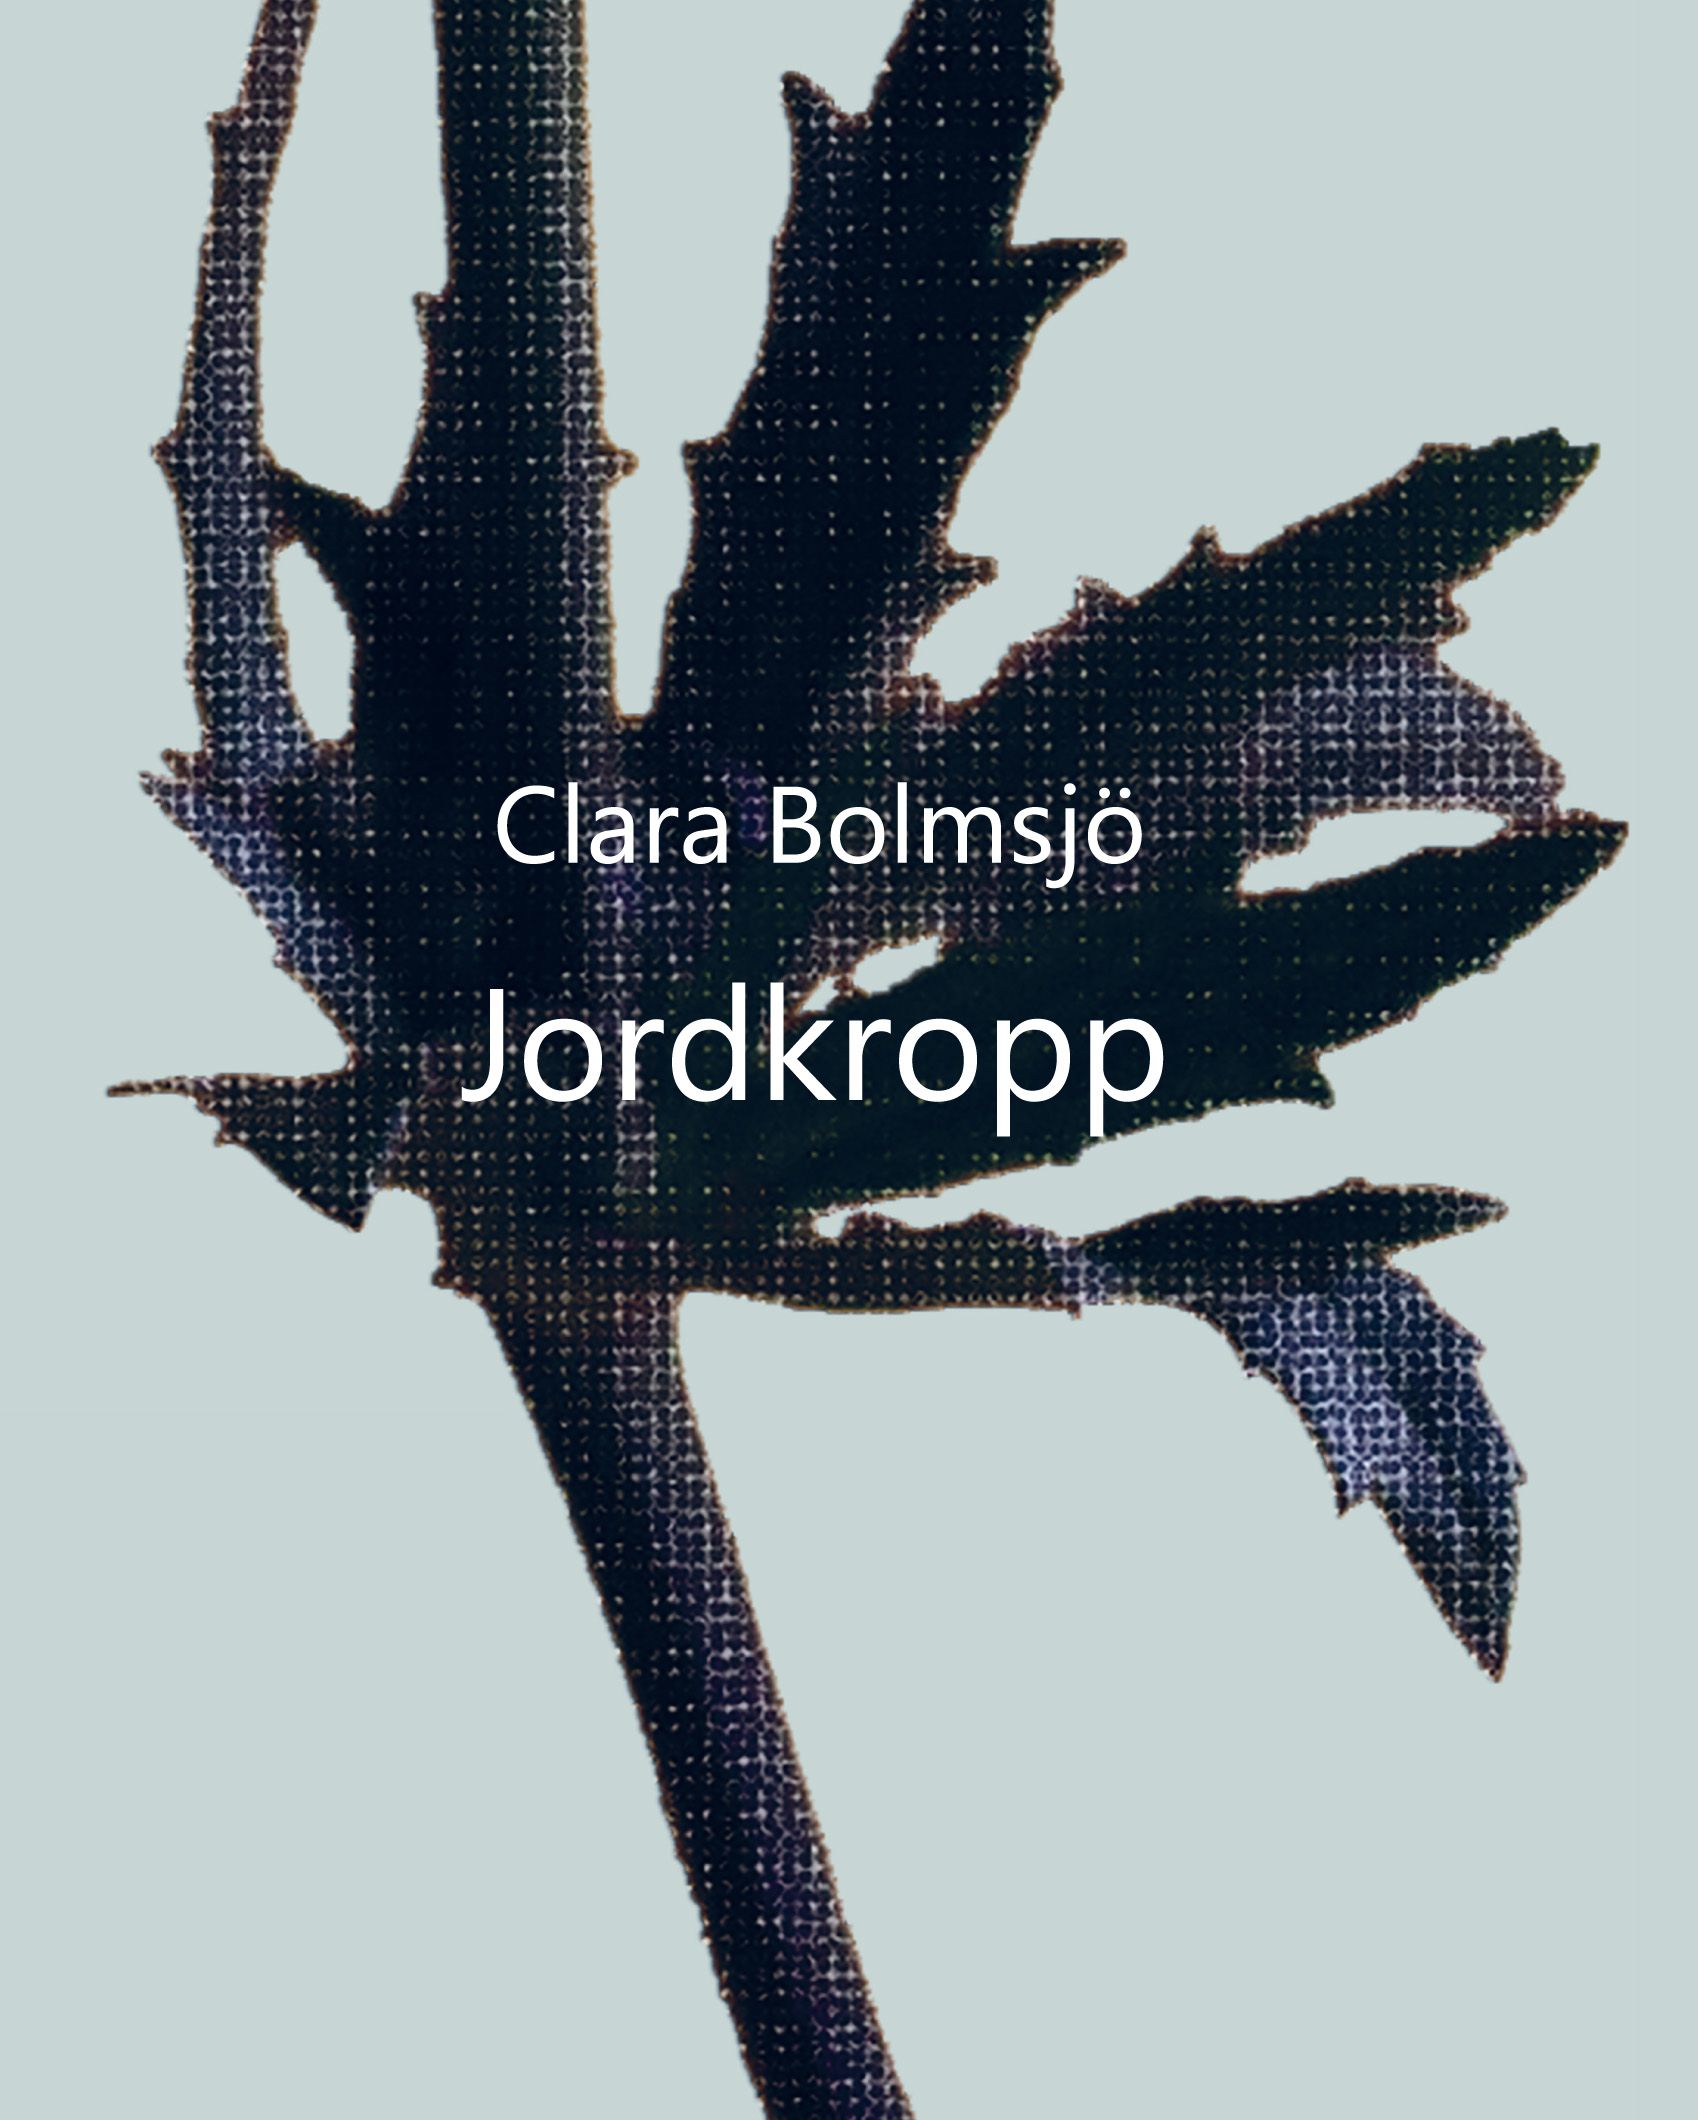 Jordkropp, e-bog af Clara Bolmsjö